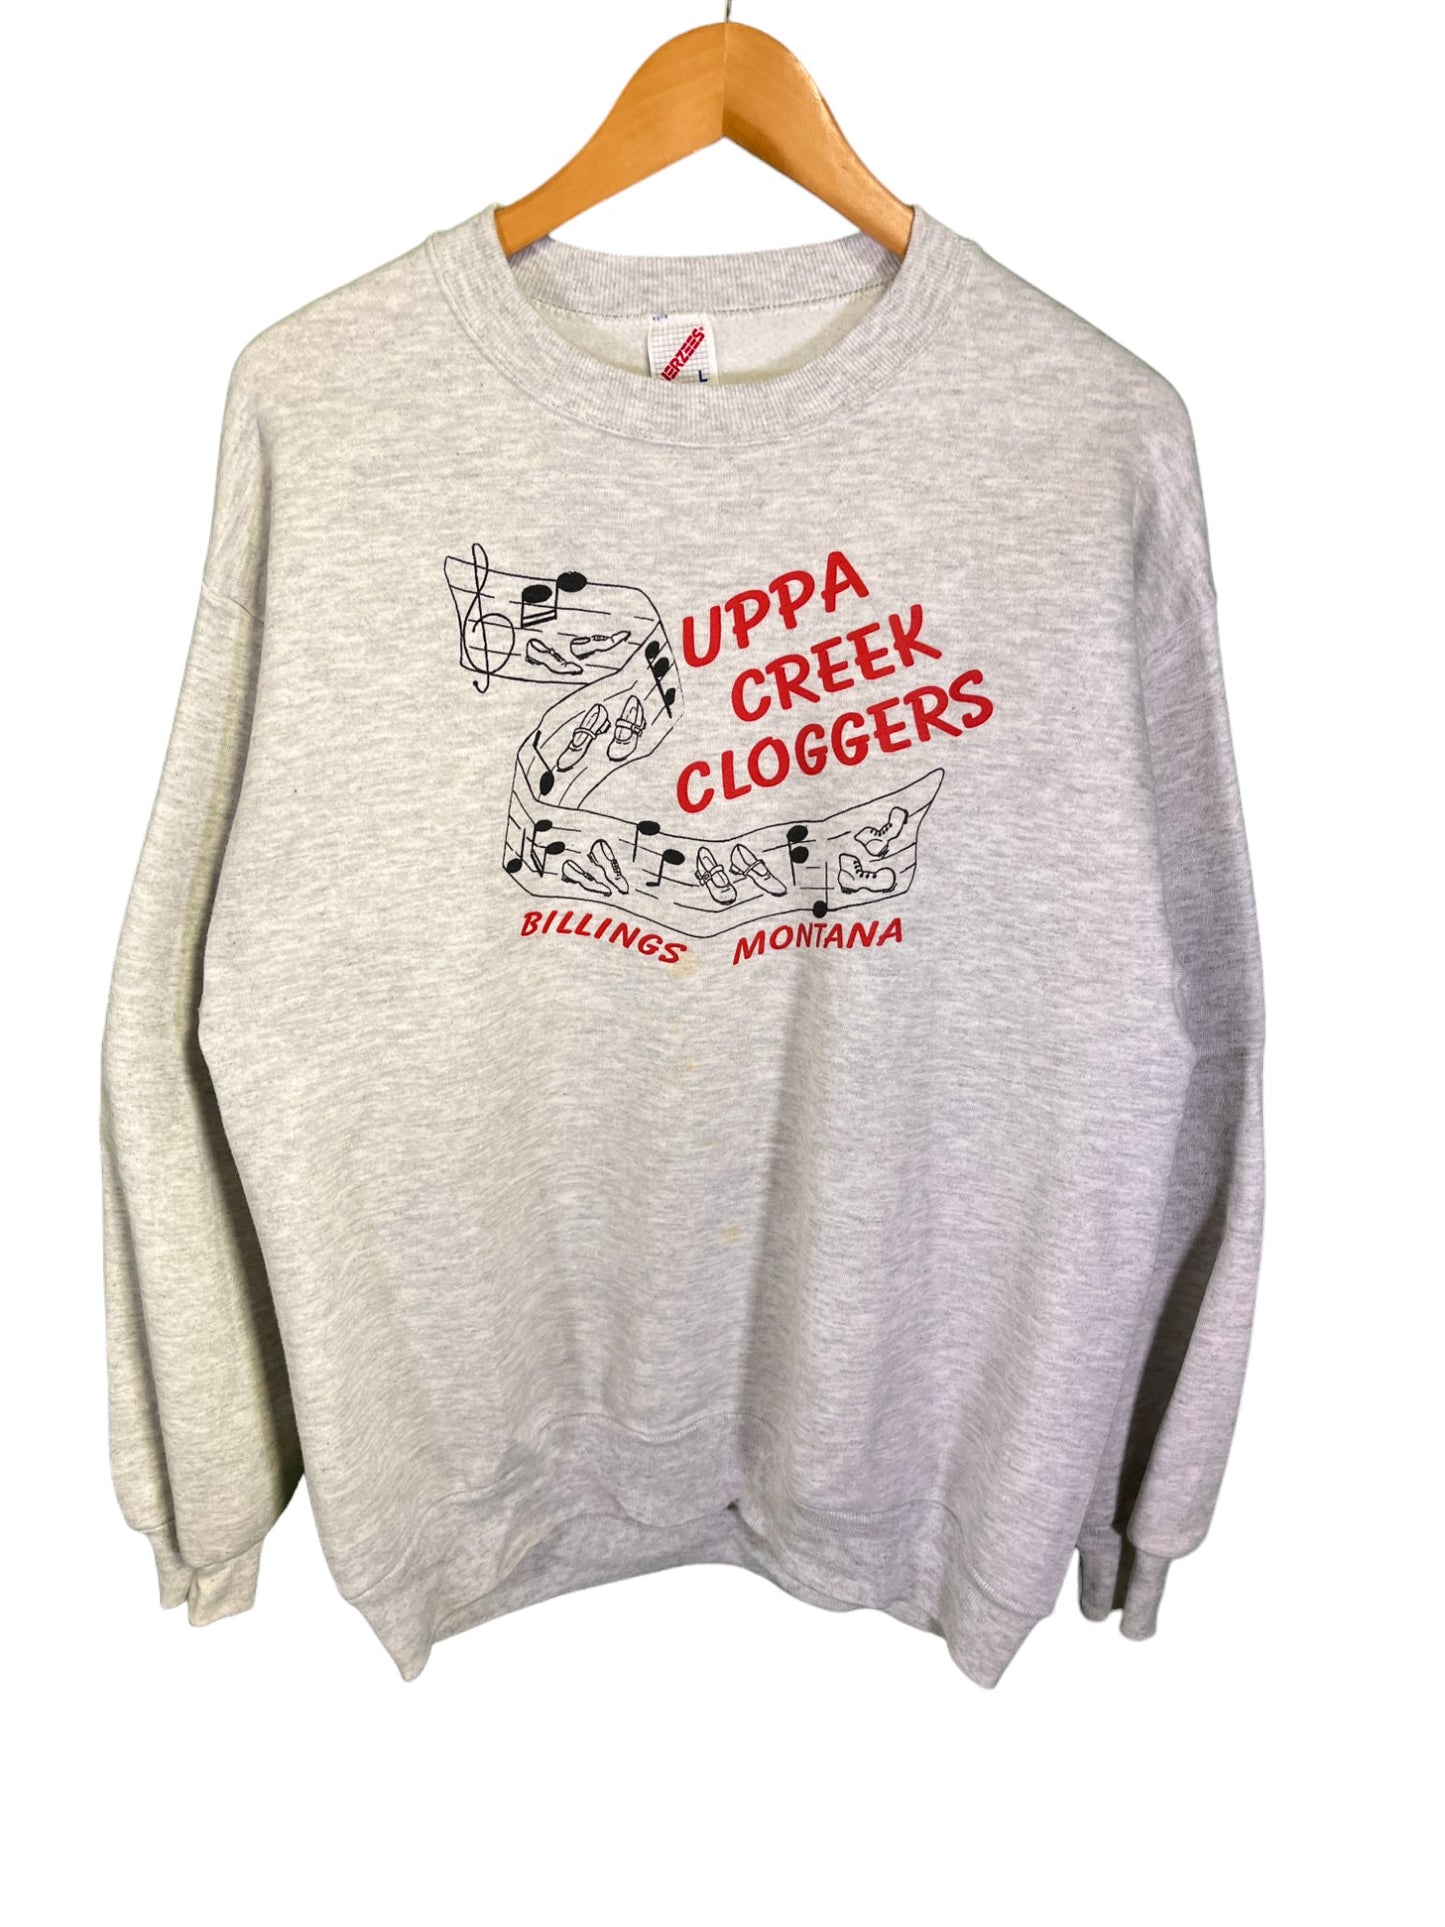 Vintage 90's Billings Montana Uppa Creek Cloggers Sweater Size Large